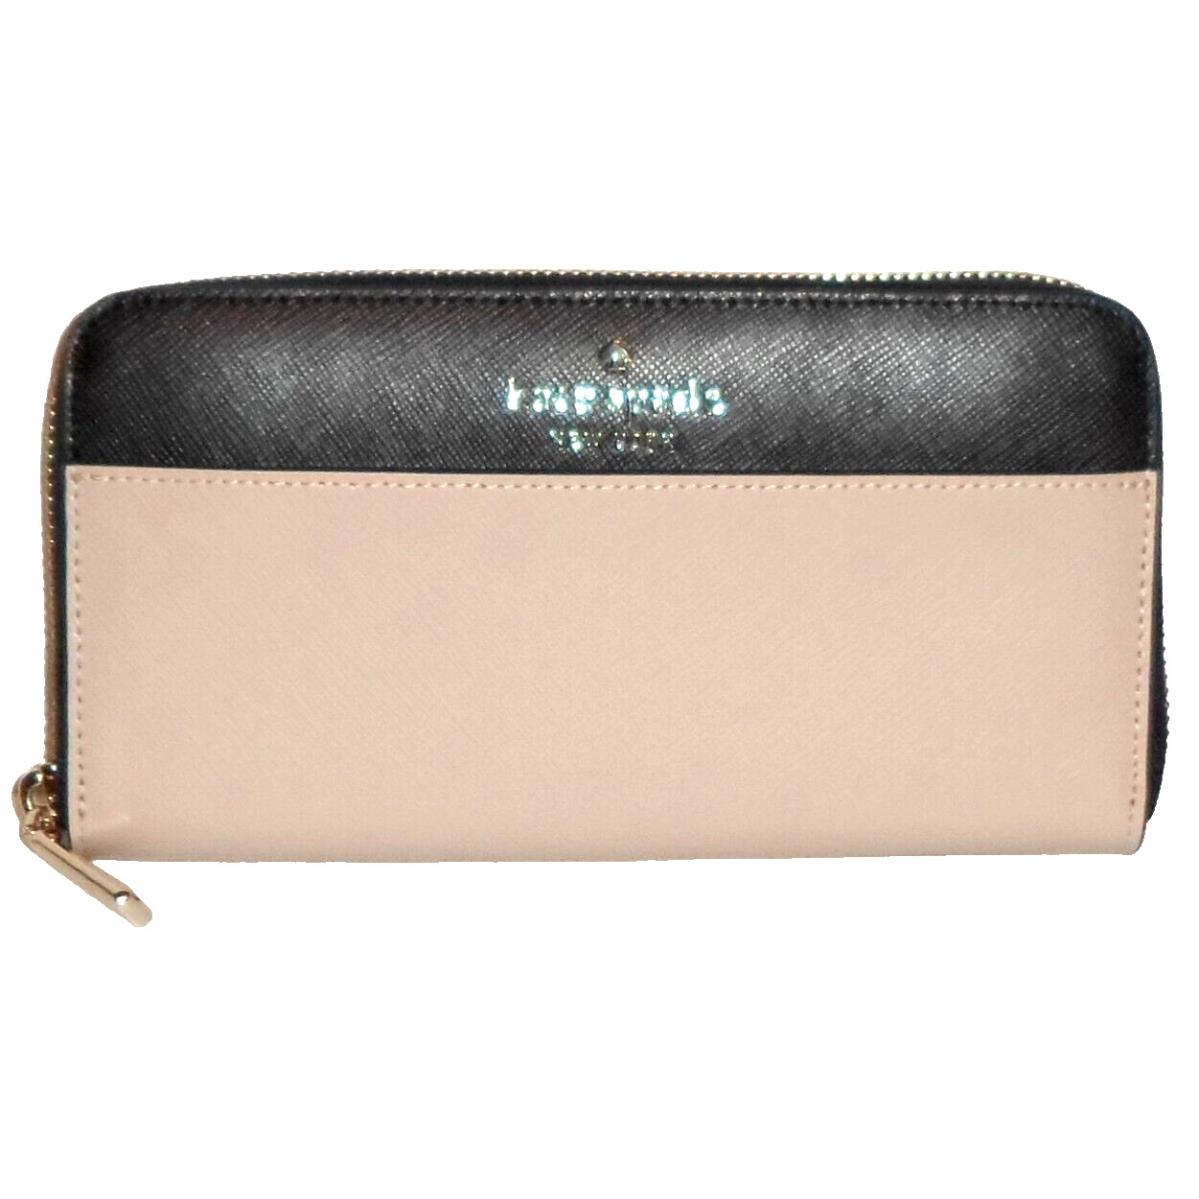 Kate Spade Staci Colorblock Warm Beige Saffiano Leather Zip-around Clutch Wallet